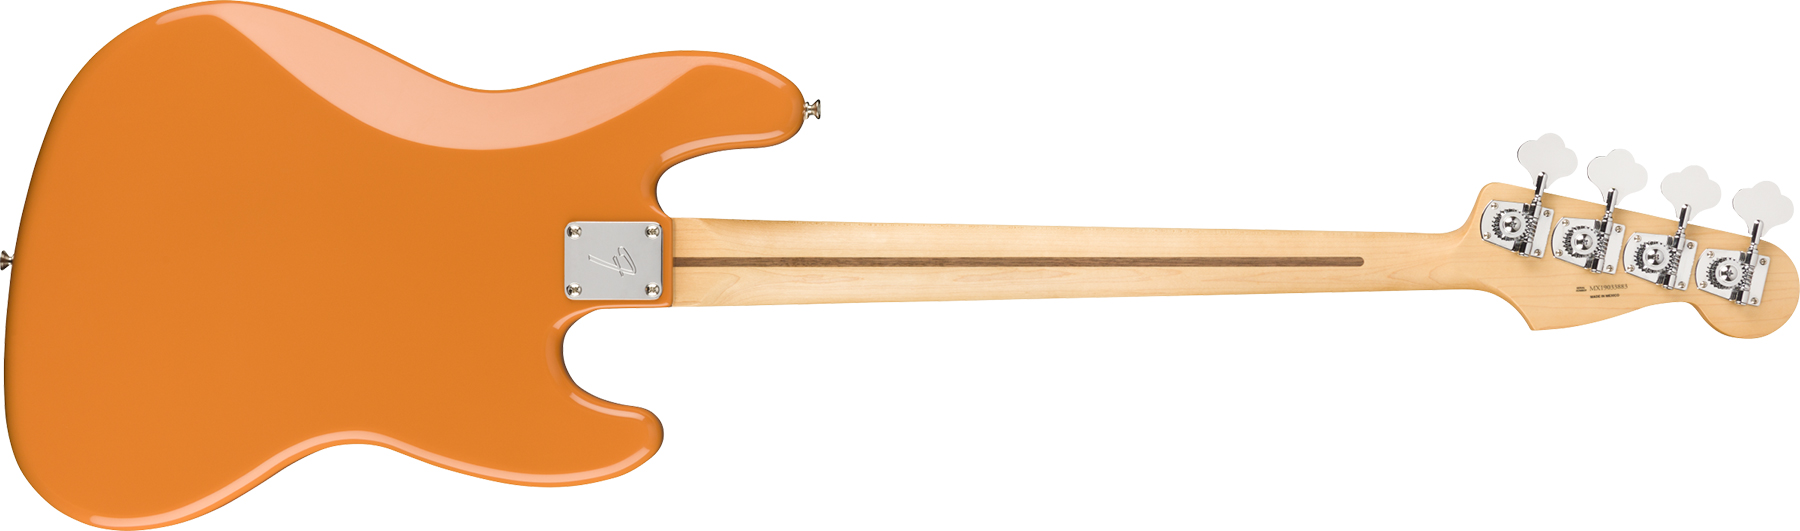 Fender Jazz Bass Player Lh Gaucher Mex Pf - Capri Orange - Bajo eléctrico de cuerpo sólido - Variation 1